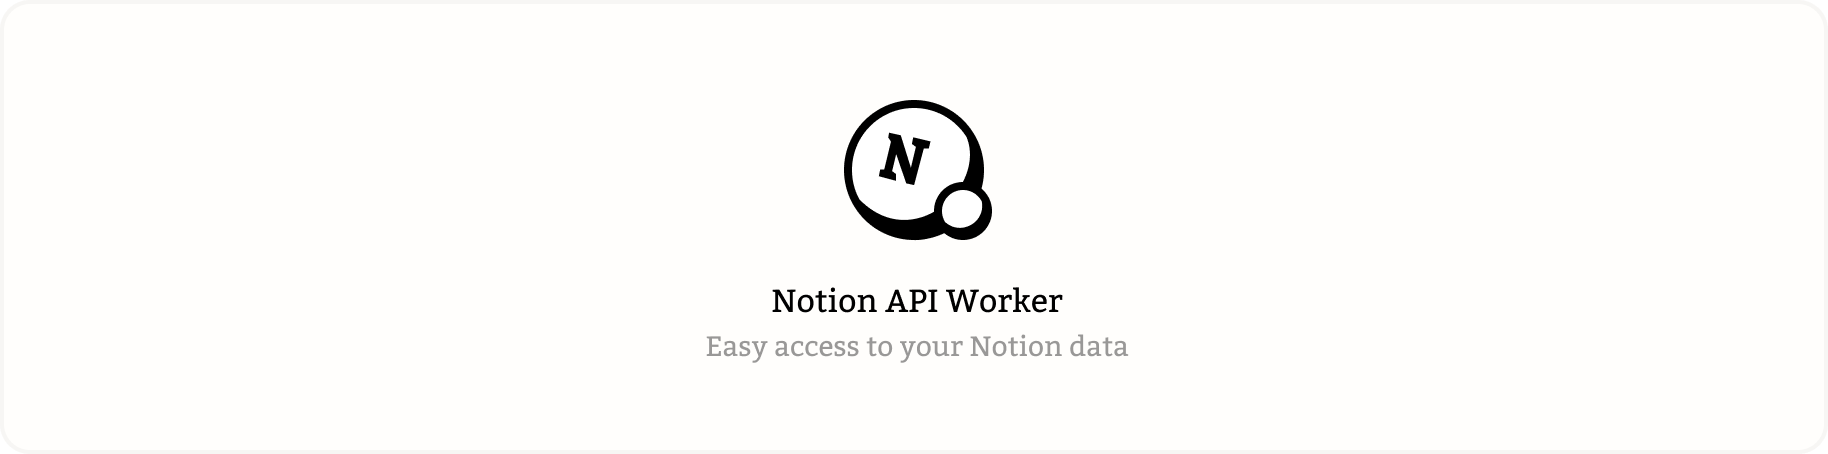 notion-api-worker